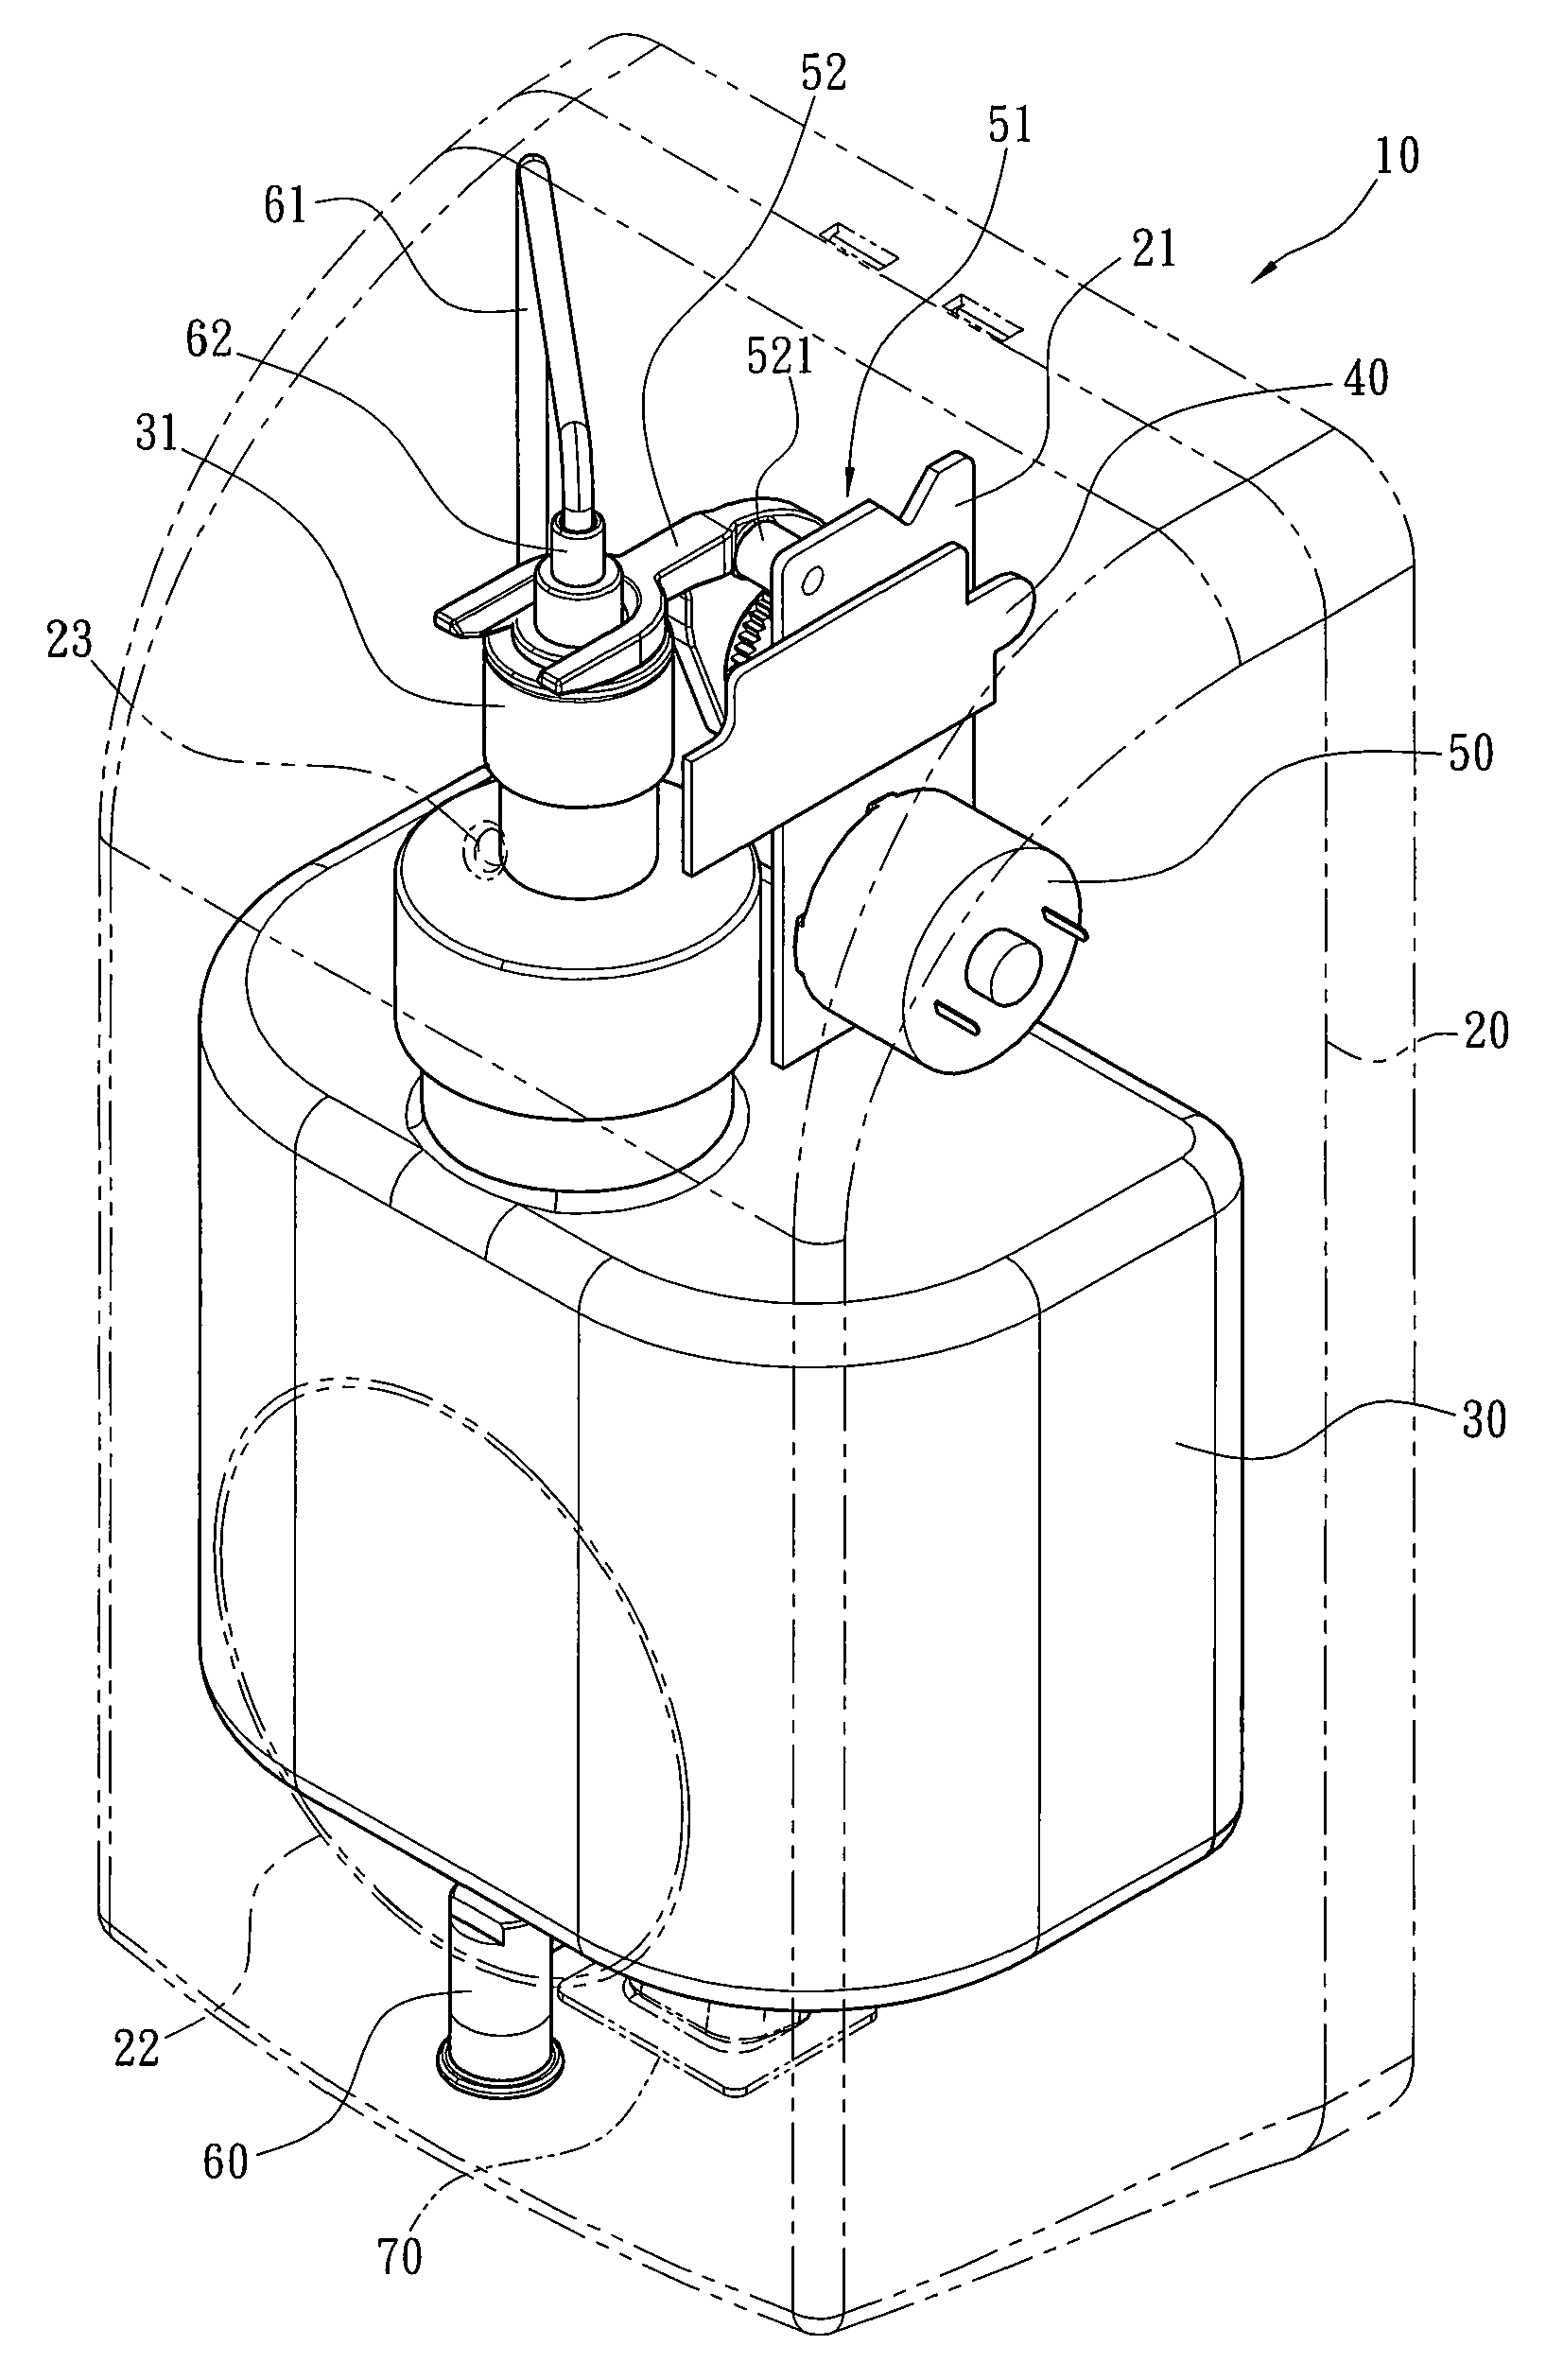 Structure of automatic foam soap dispenser